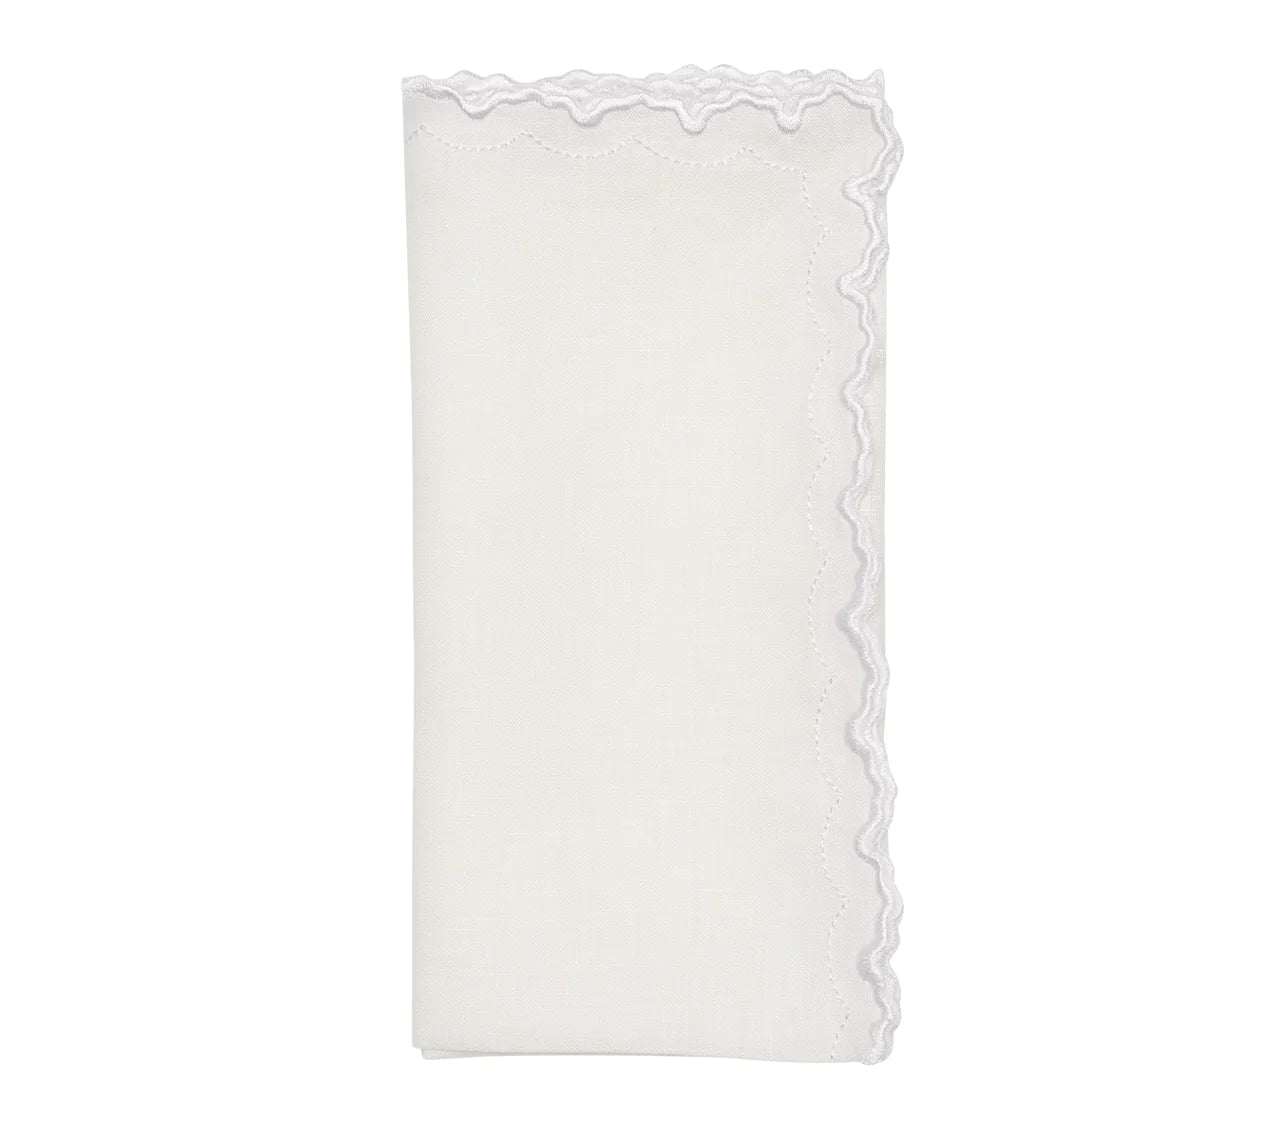 Arches Napkin in White, Set of 4